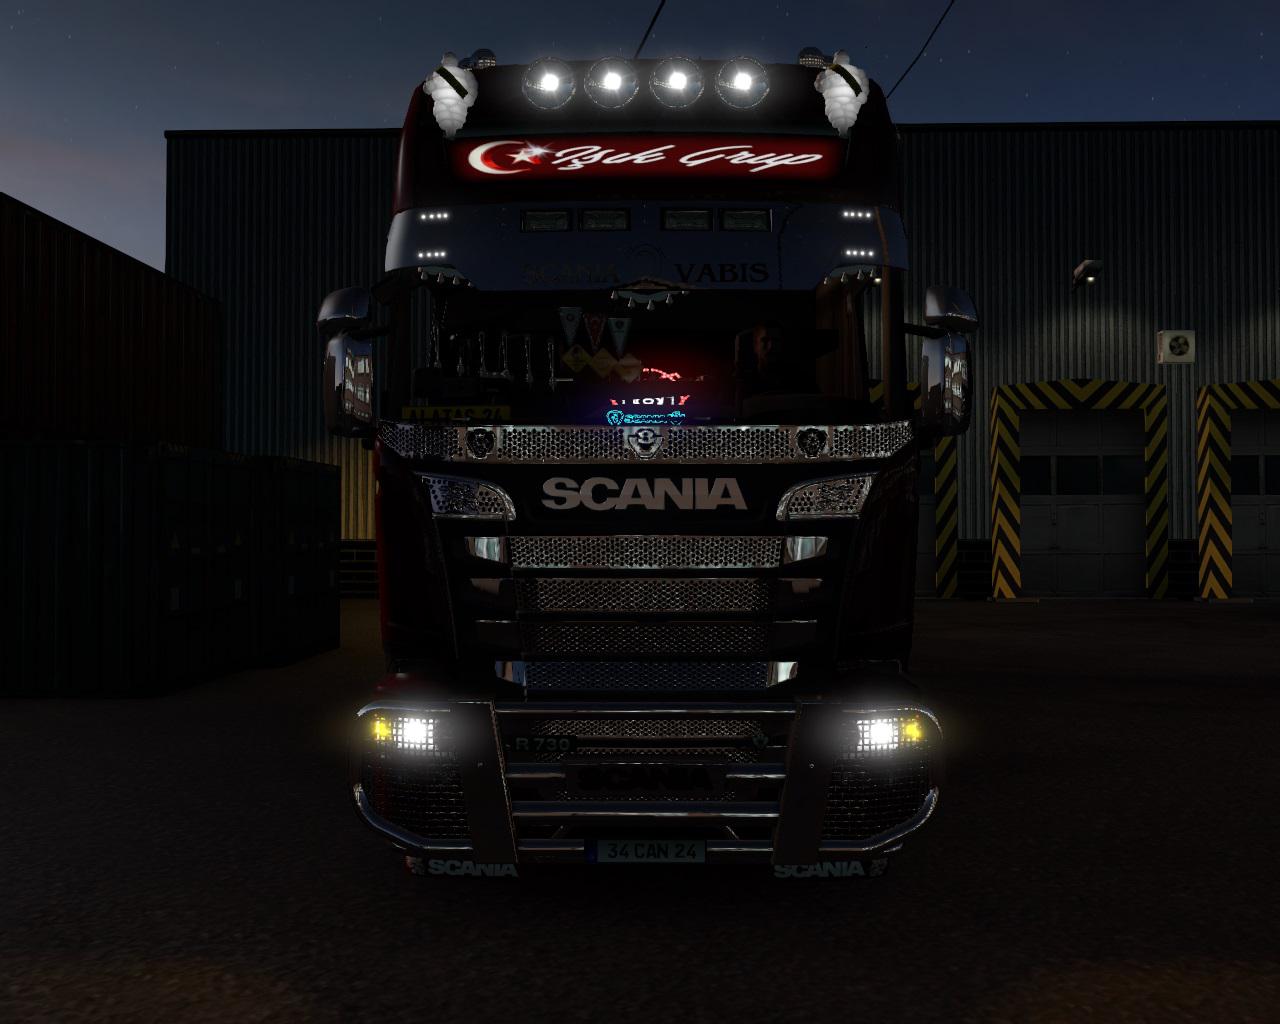 Ets2 Realistic Flare Pack 136x Euro Truck Simulator 2 Modsclub